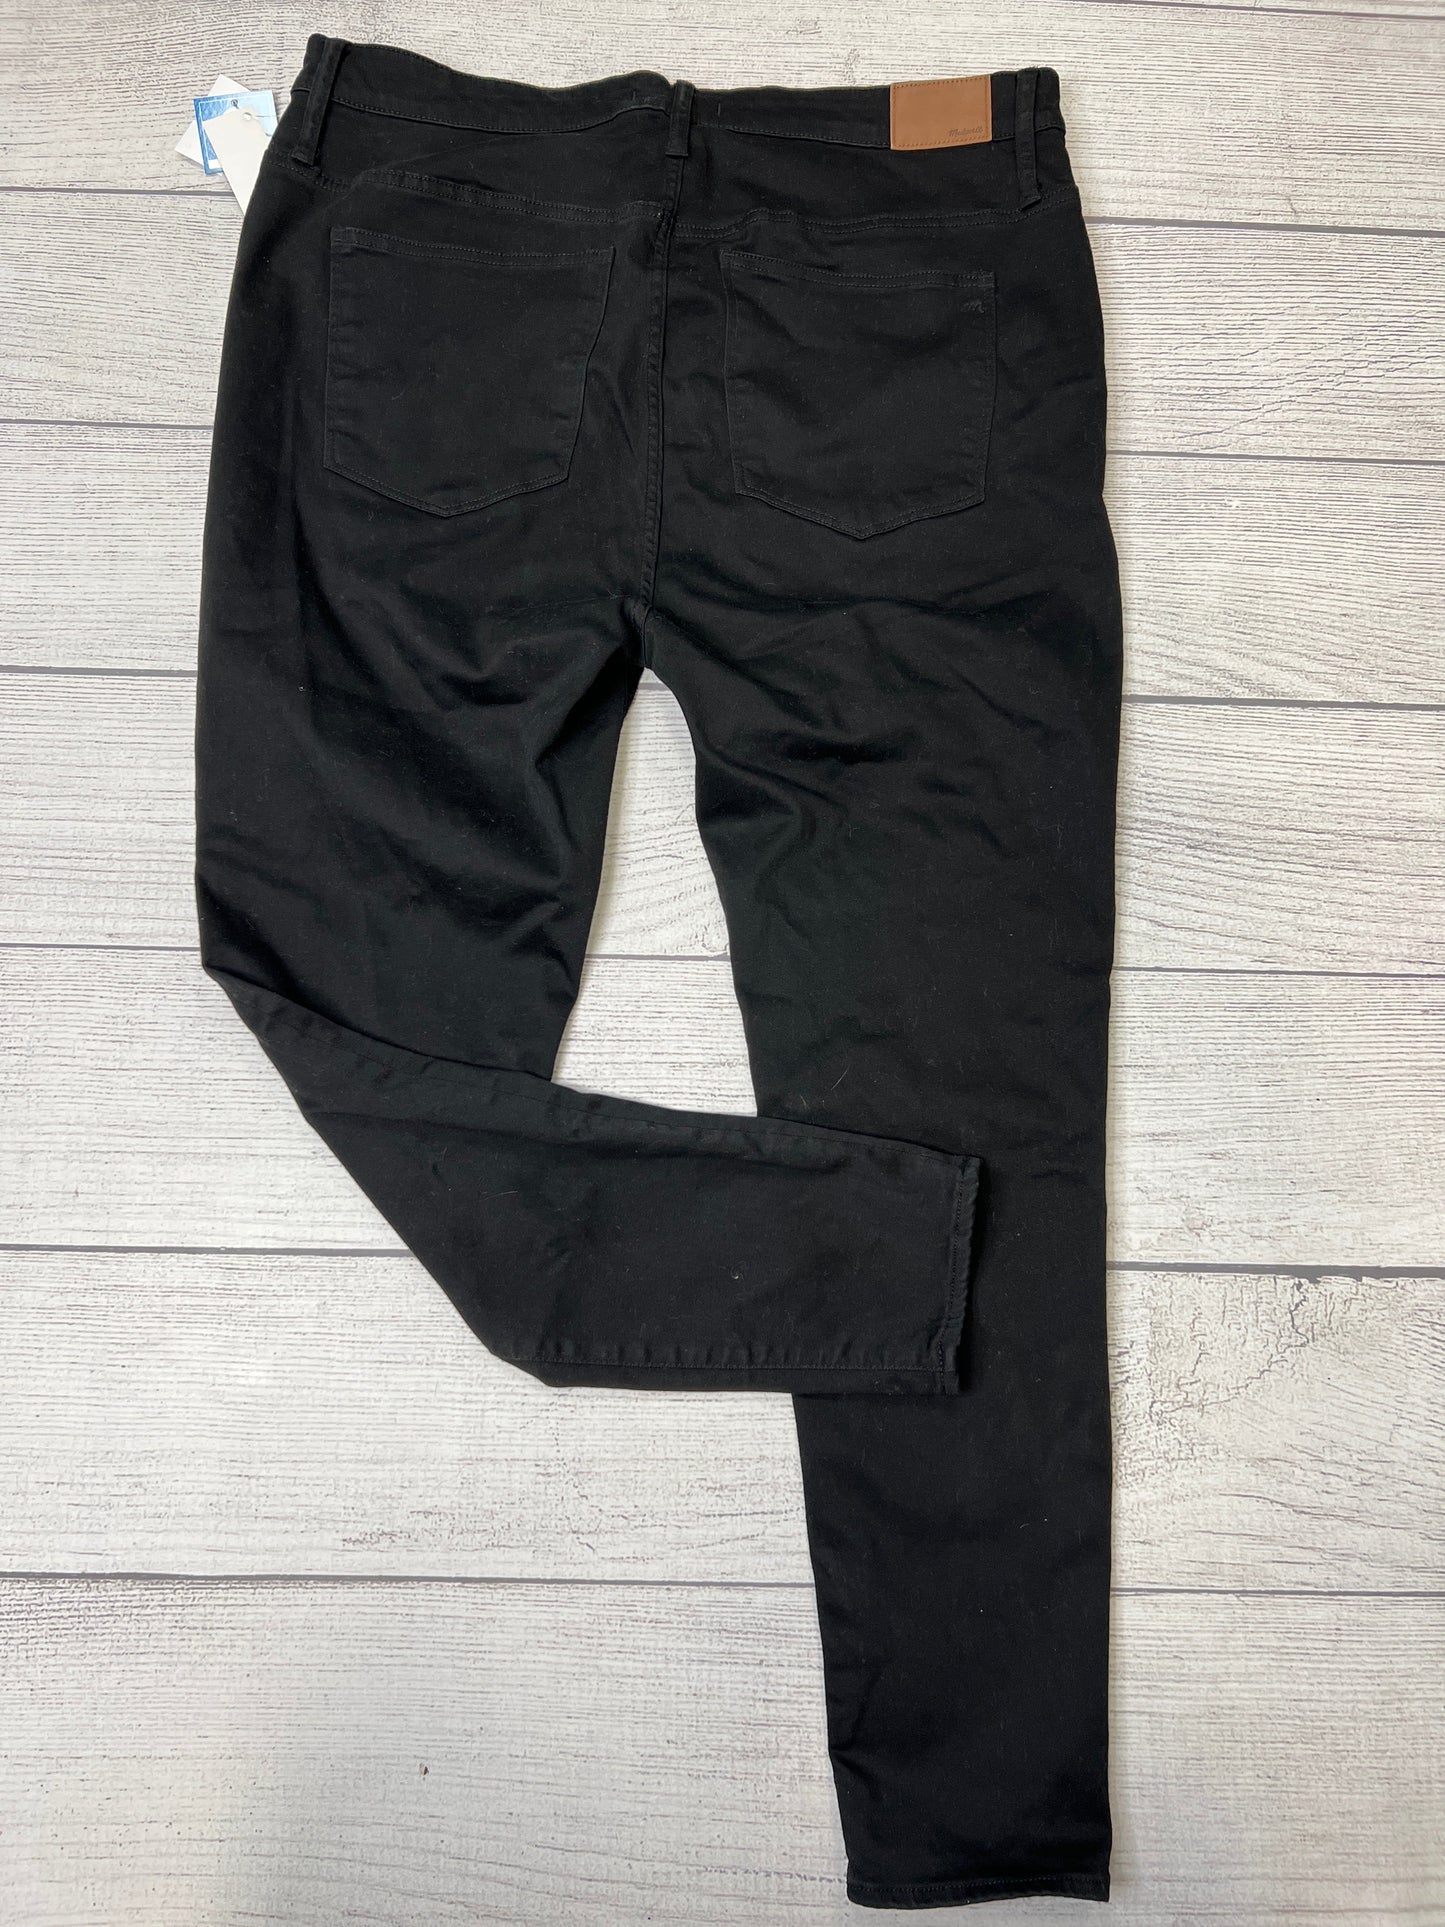 Black Jeans Designer Madewell, Size 1x